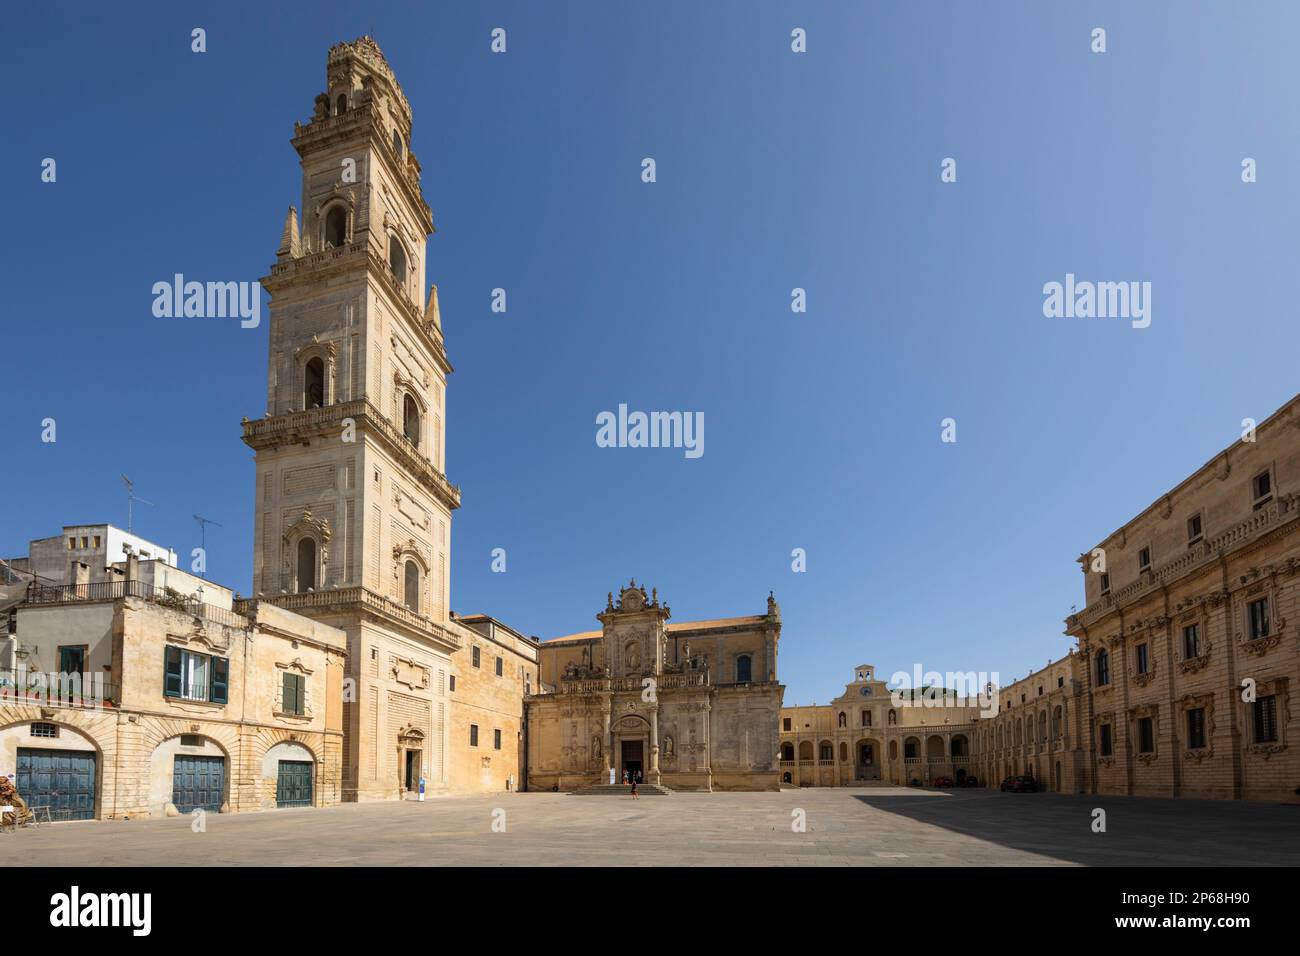 Le Duomo (cathédrale) et le Palazzo Vescovile avec le campanile à Piazza del Duomo, Lecce, Puglia, Italie, Europe Banque D'Images